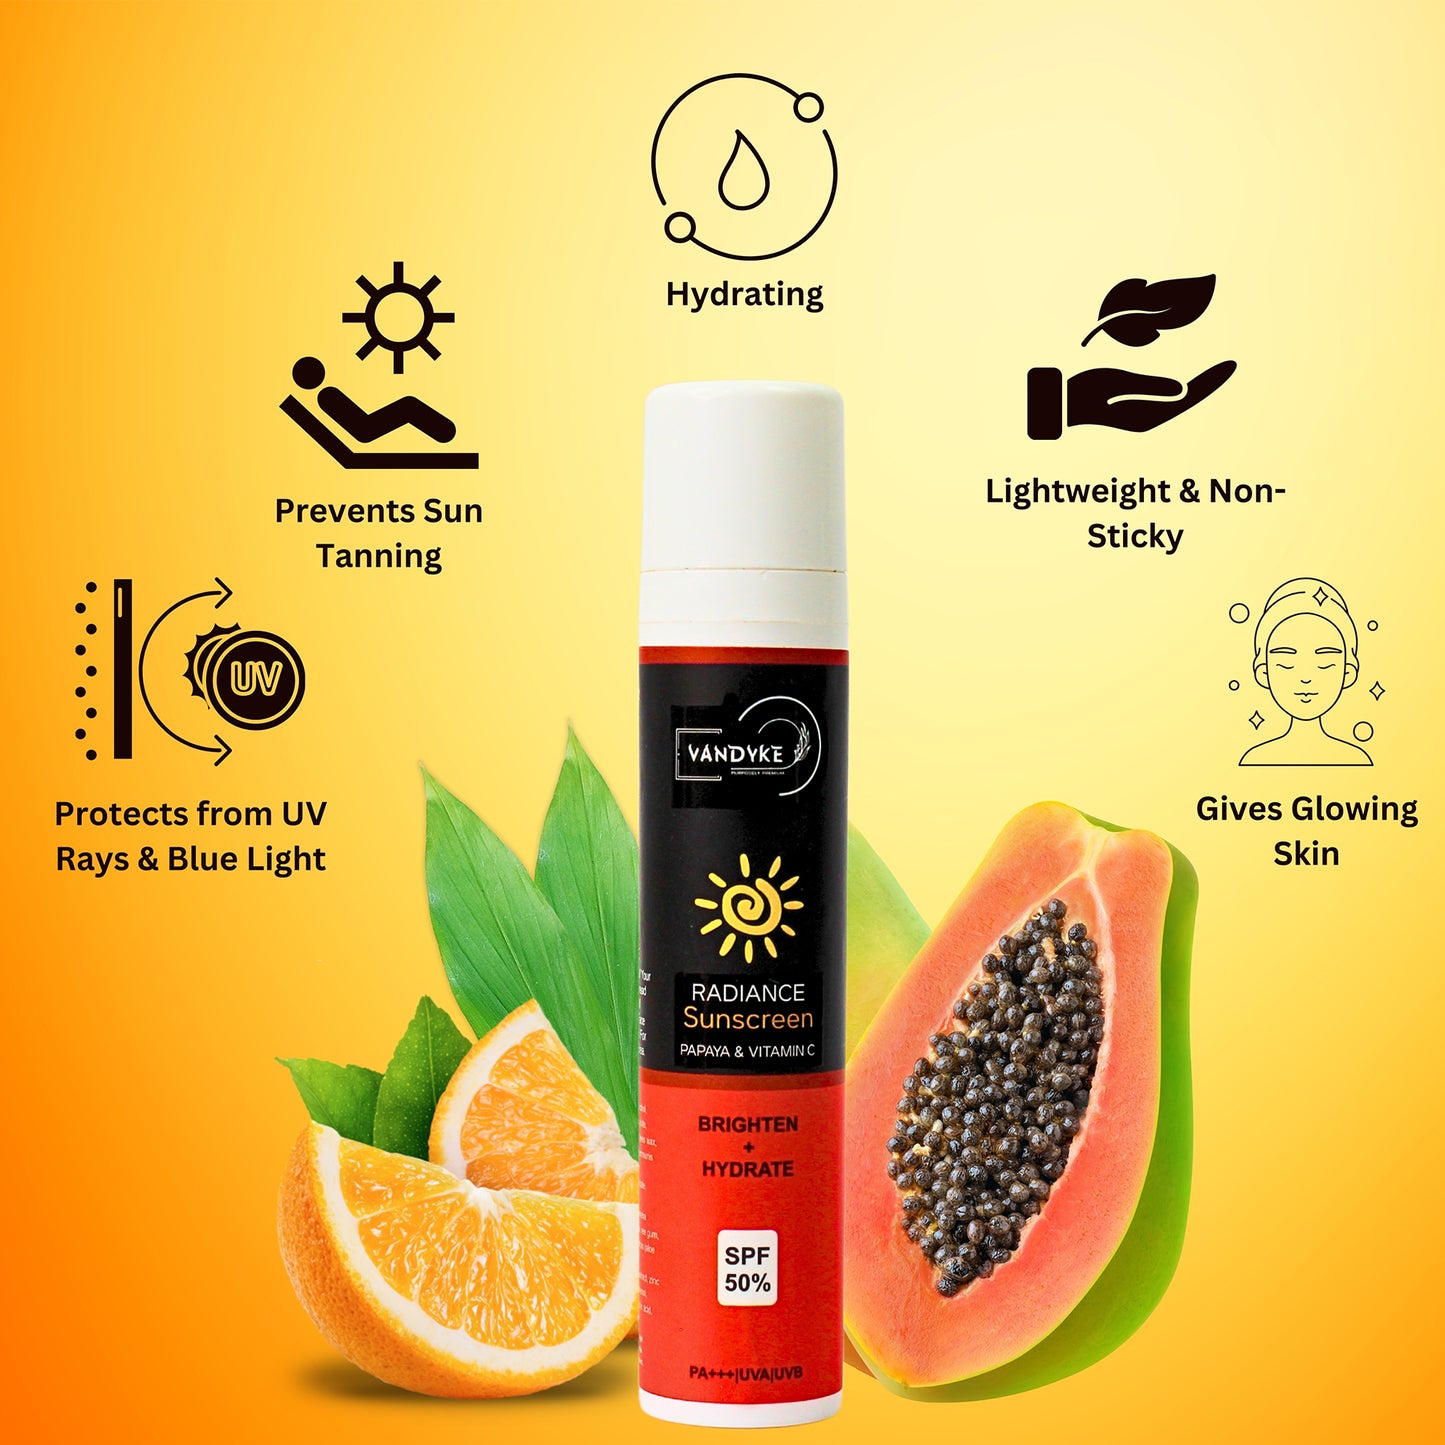 Vandyke Radiance Sunscreen With Papaya & Vitamin C SPF 50 PA+++, 50gm